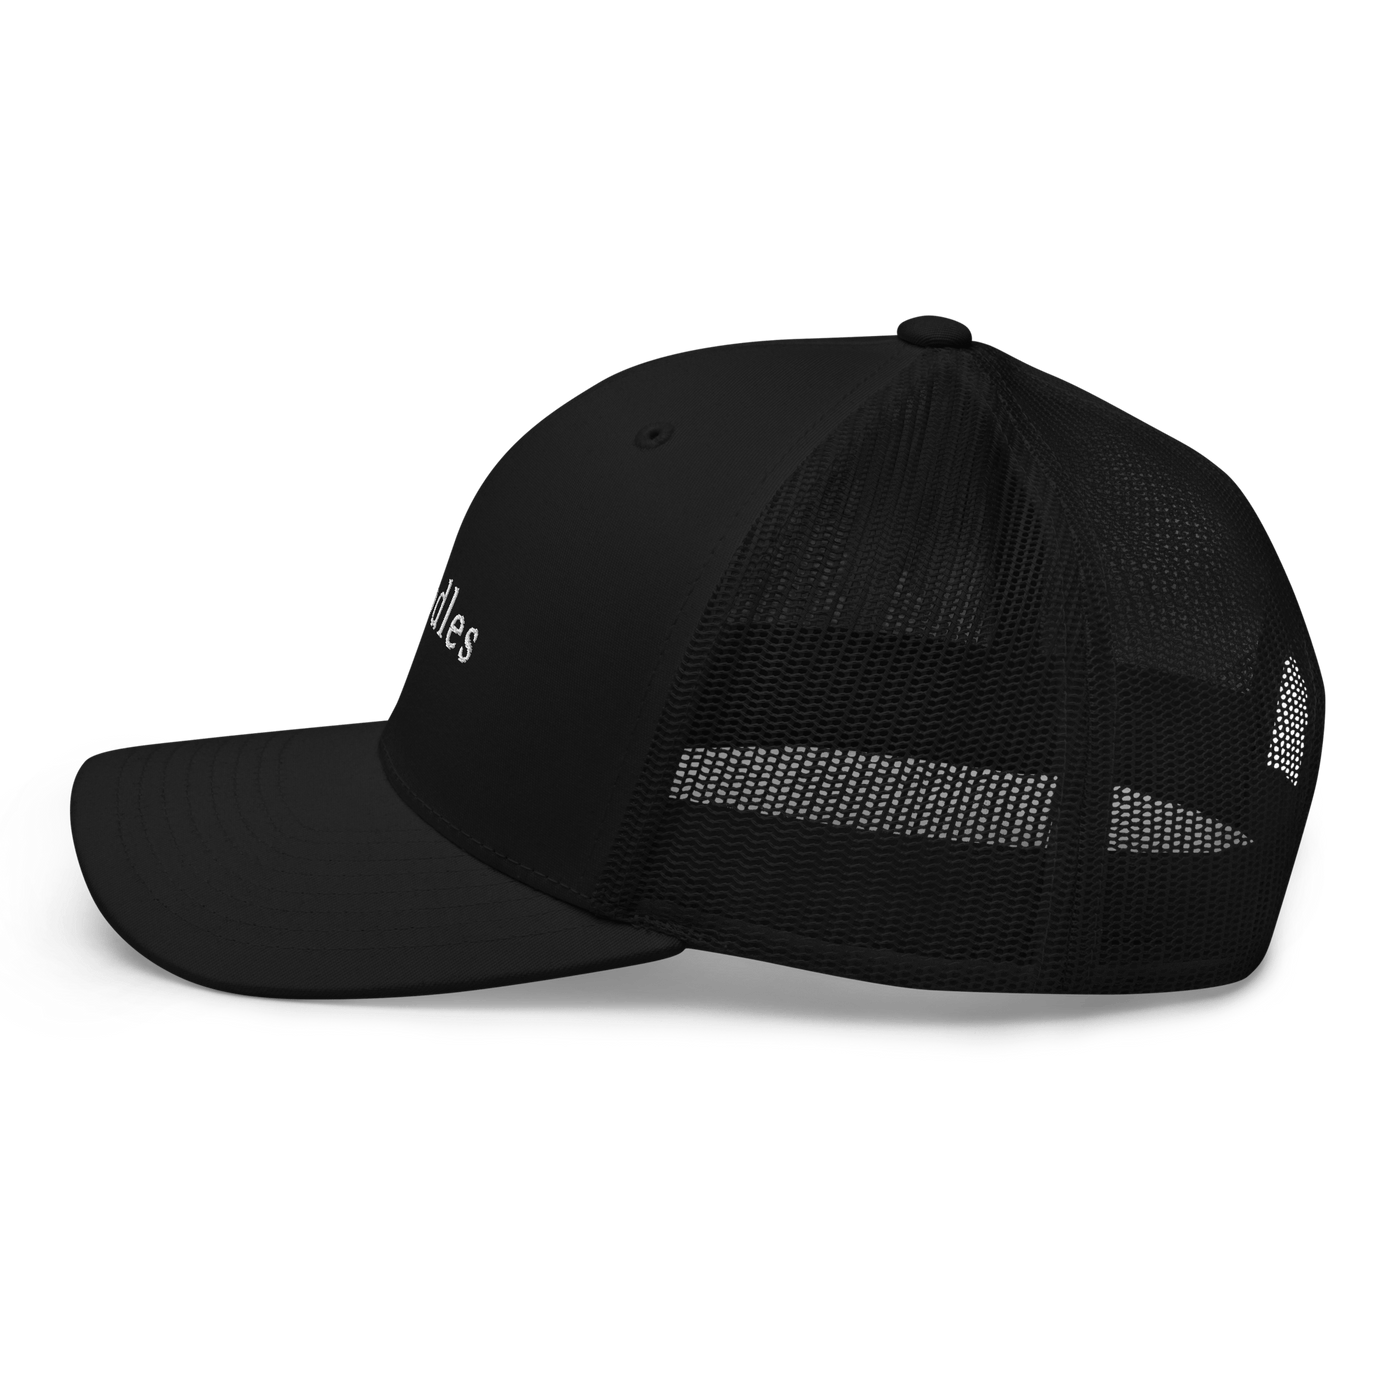 Noodles Trucker Cap - Black - - Just Another Cap Store